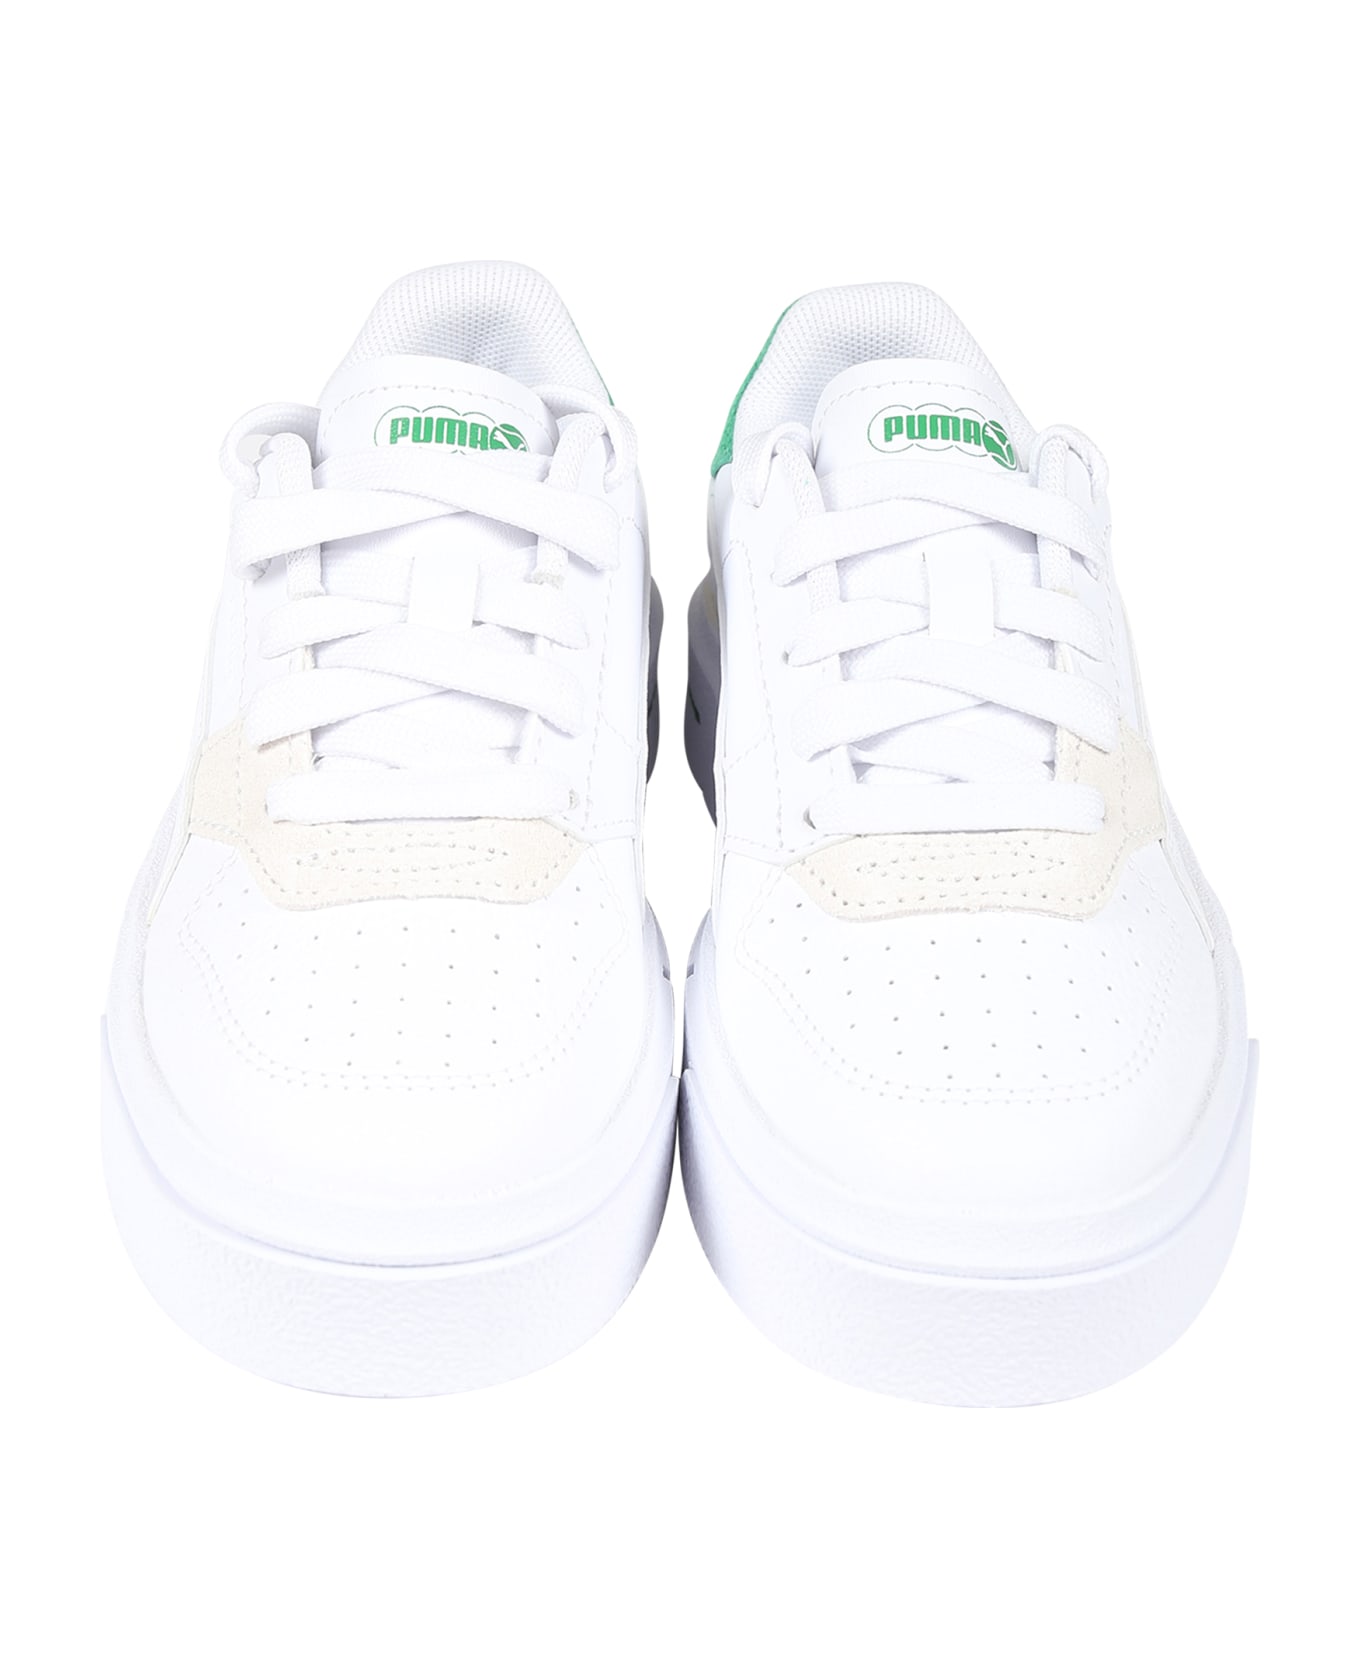 Puma White Sneakers For Kids - White